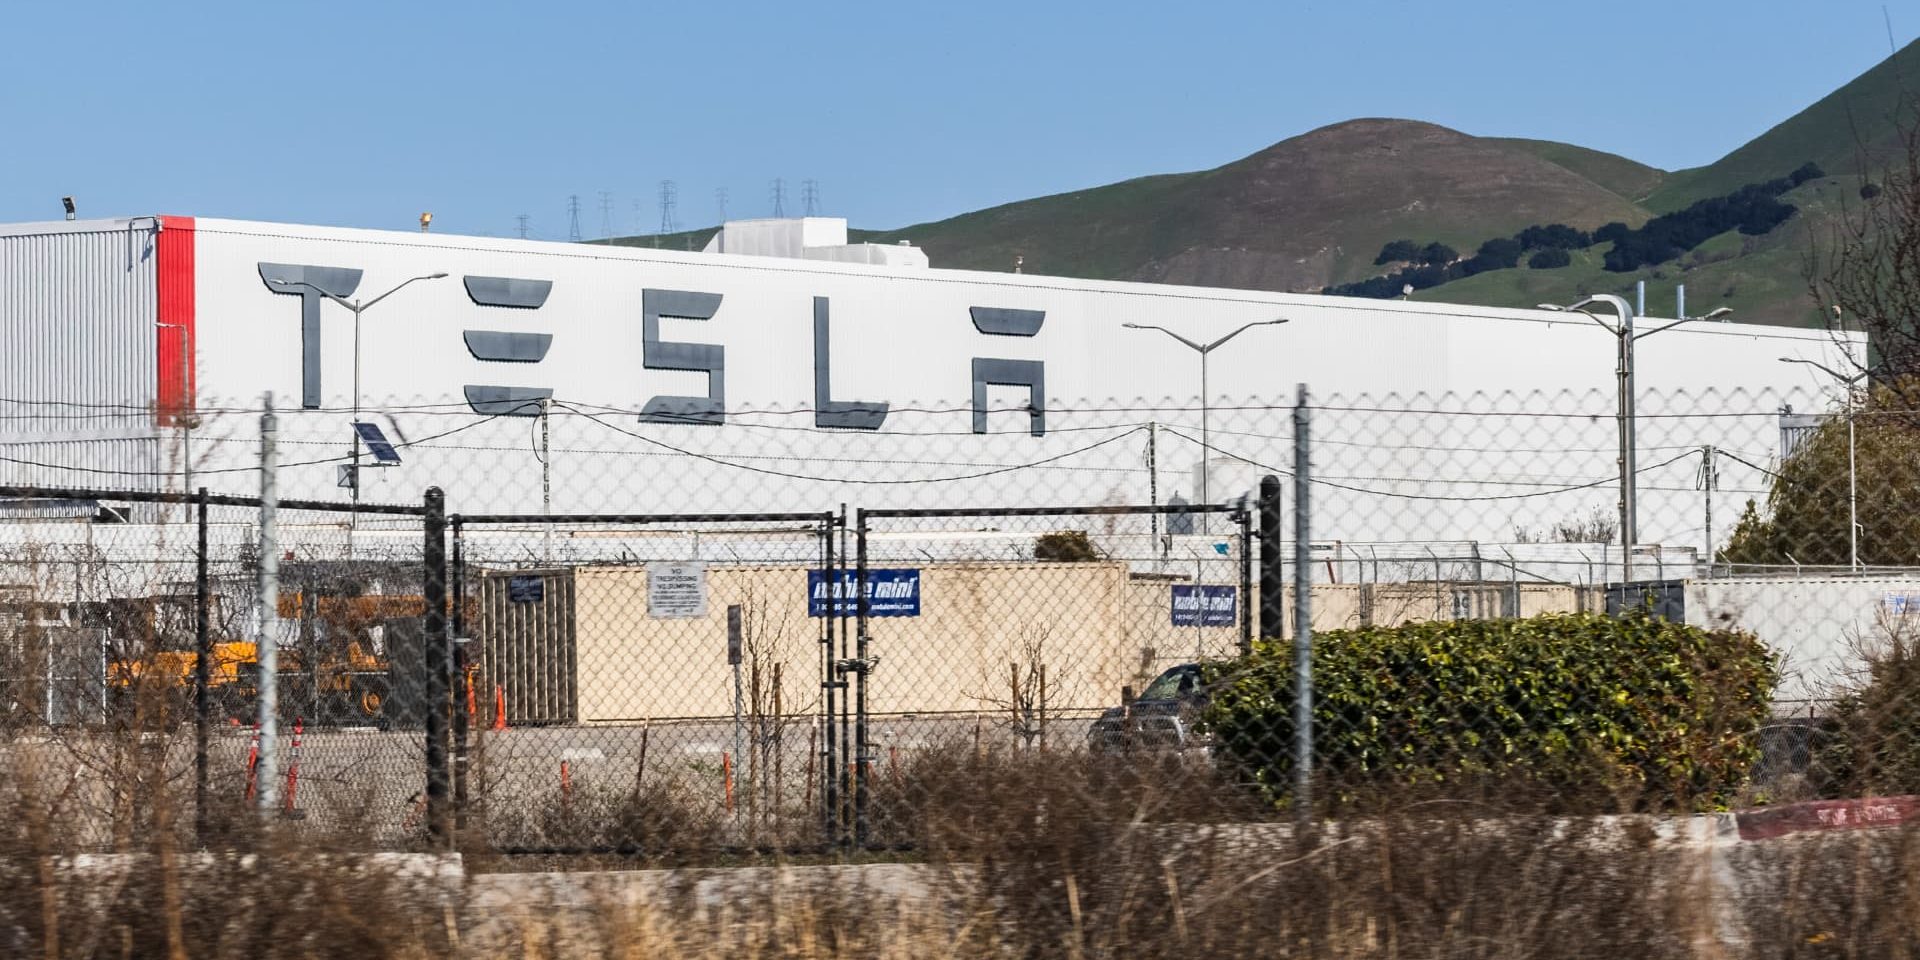 Tesla targets Australian company in lawsuit over battery technology – report